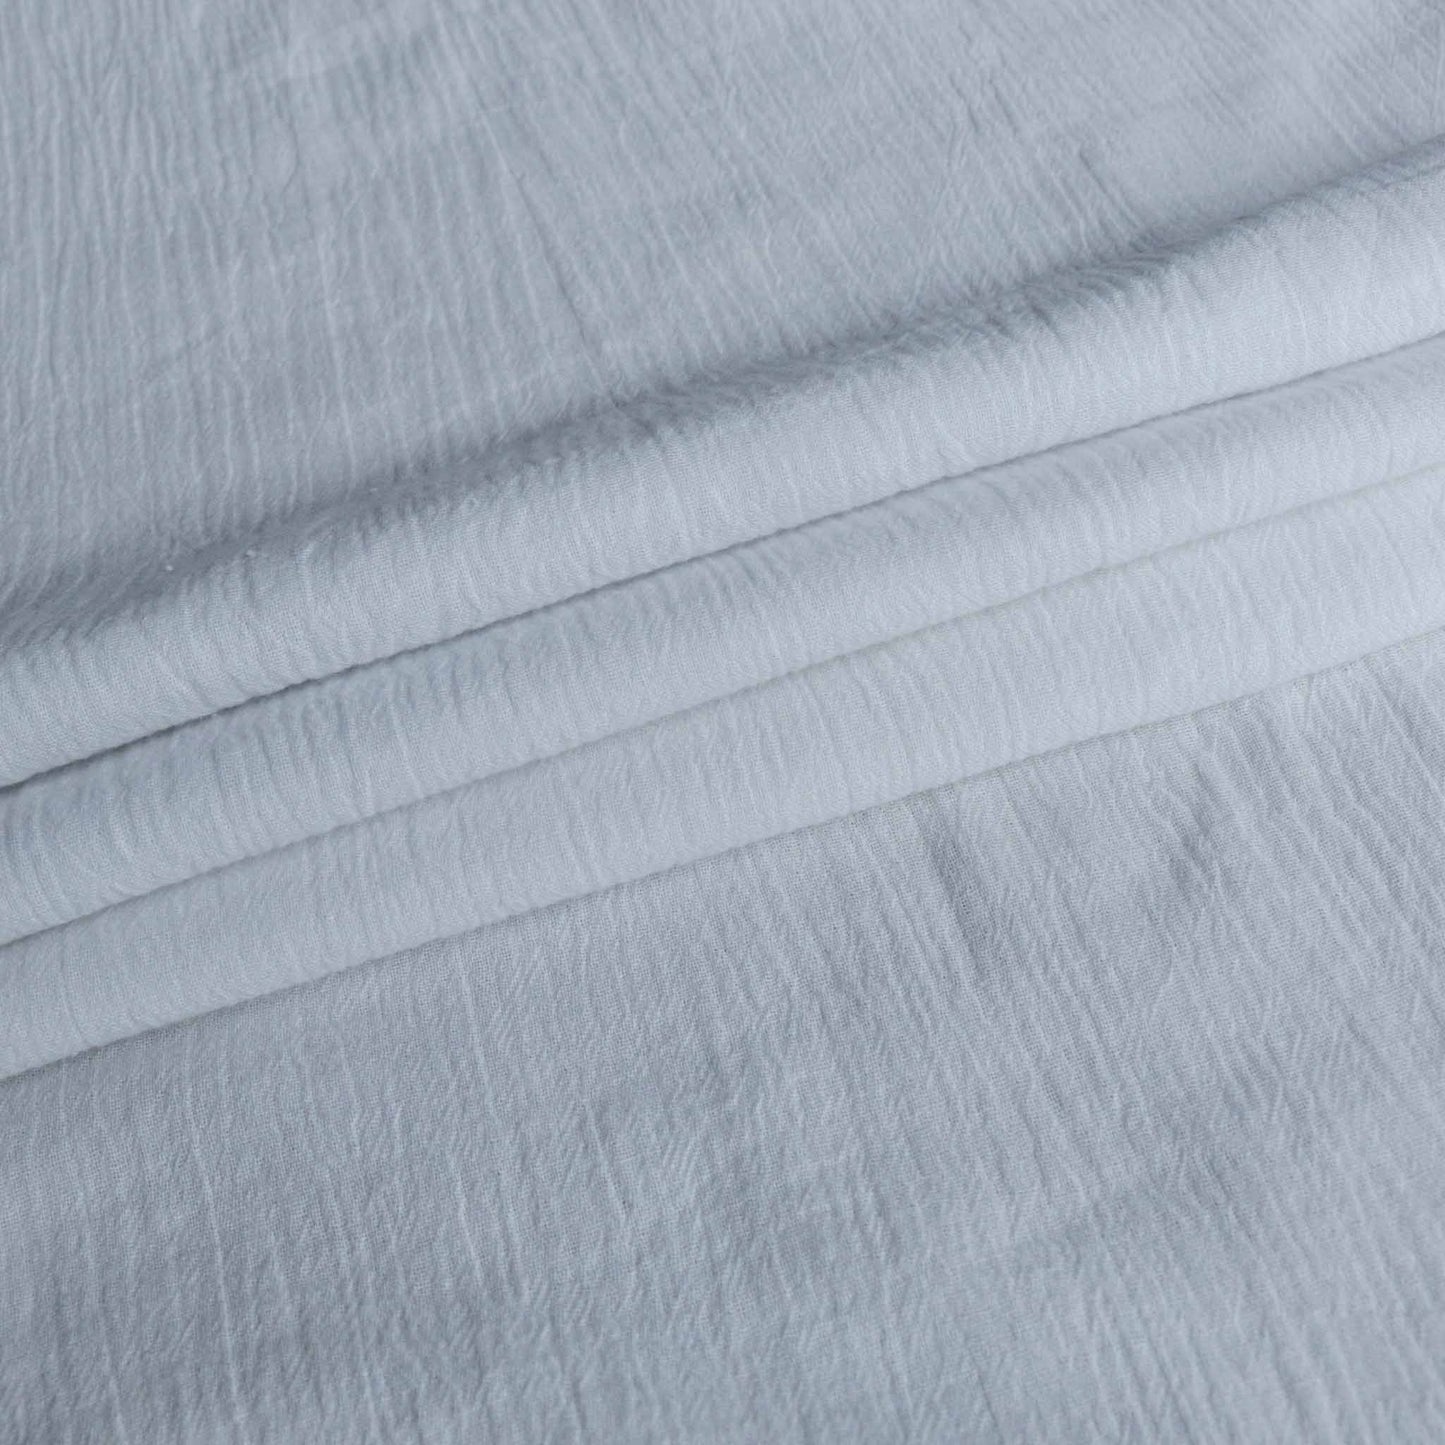 folded cotton gauze dressmaking fabric in plain white colour